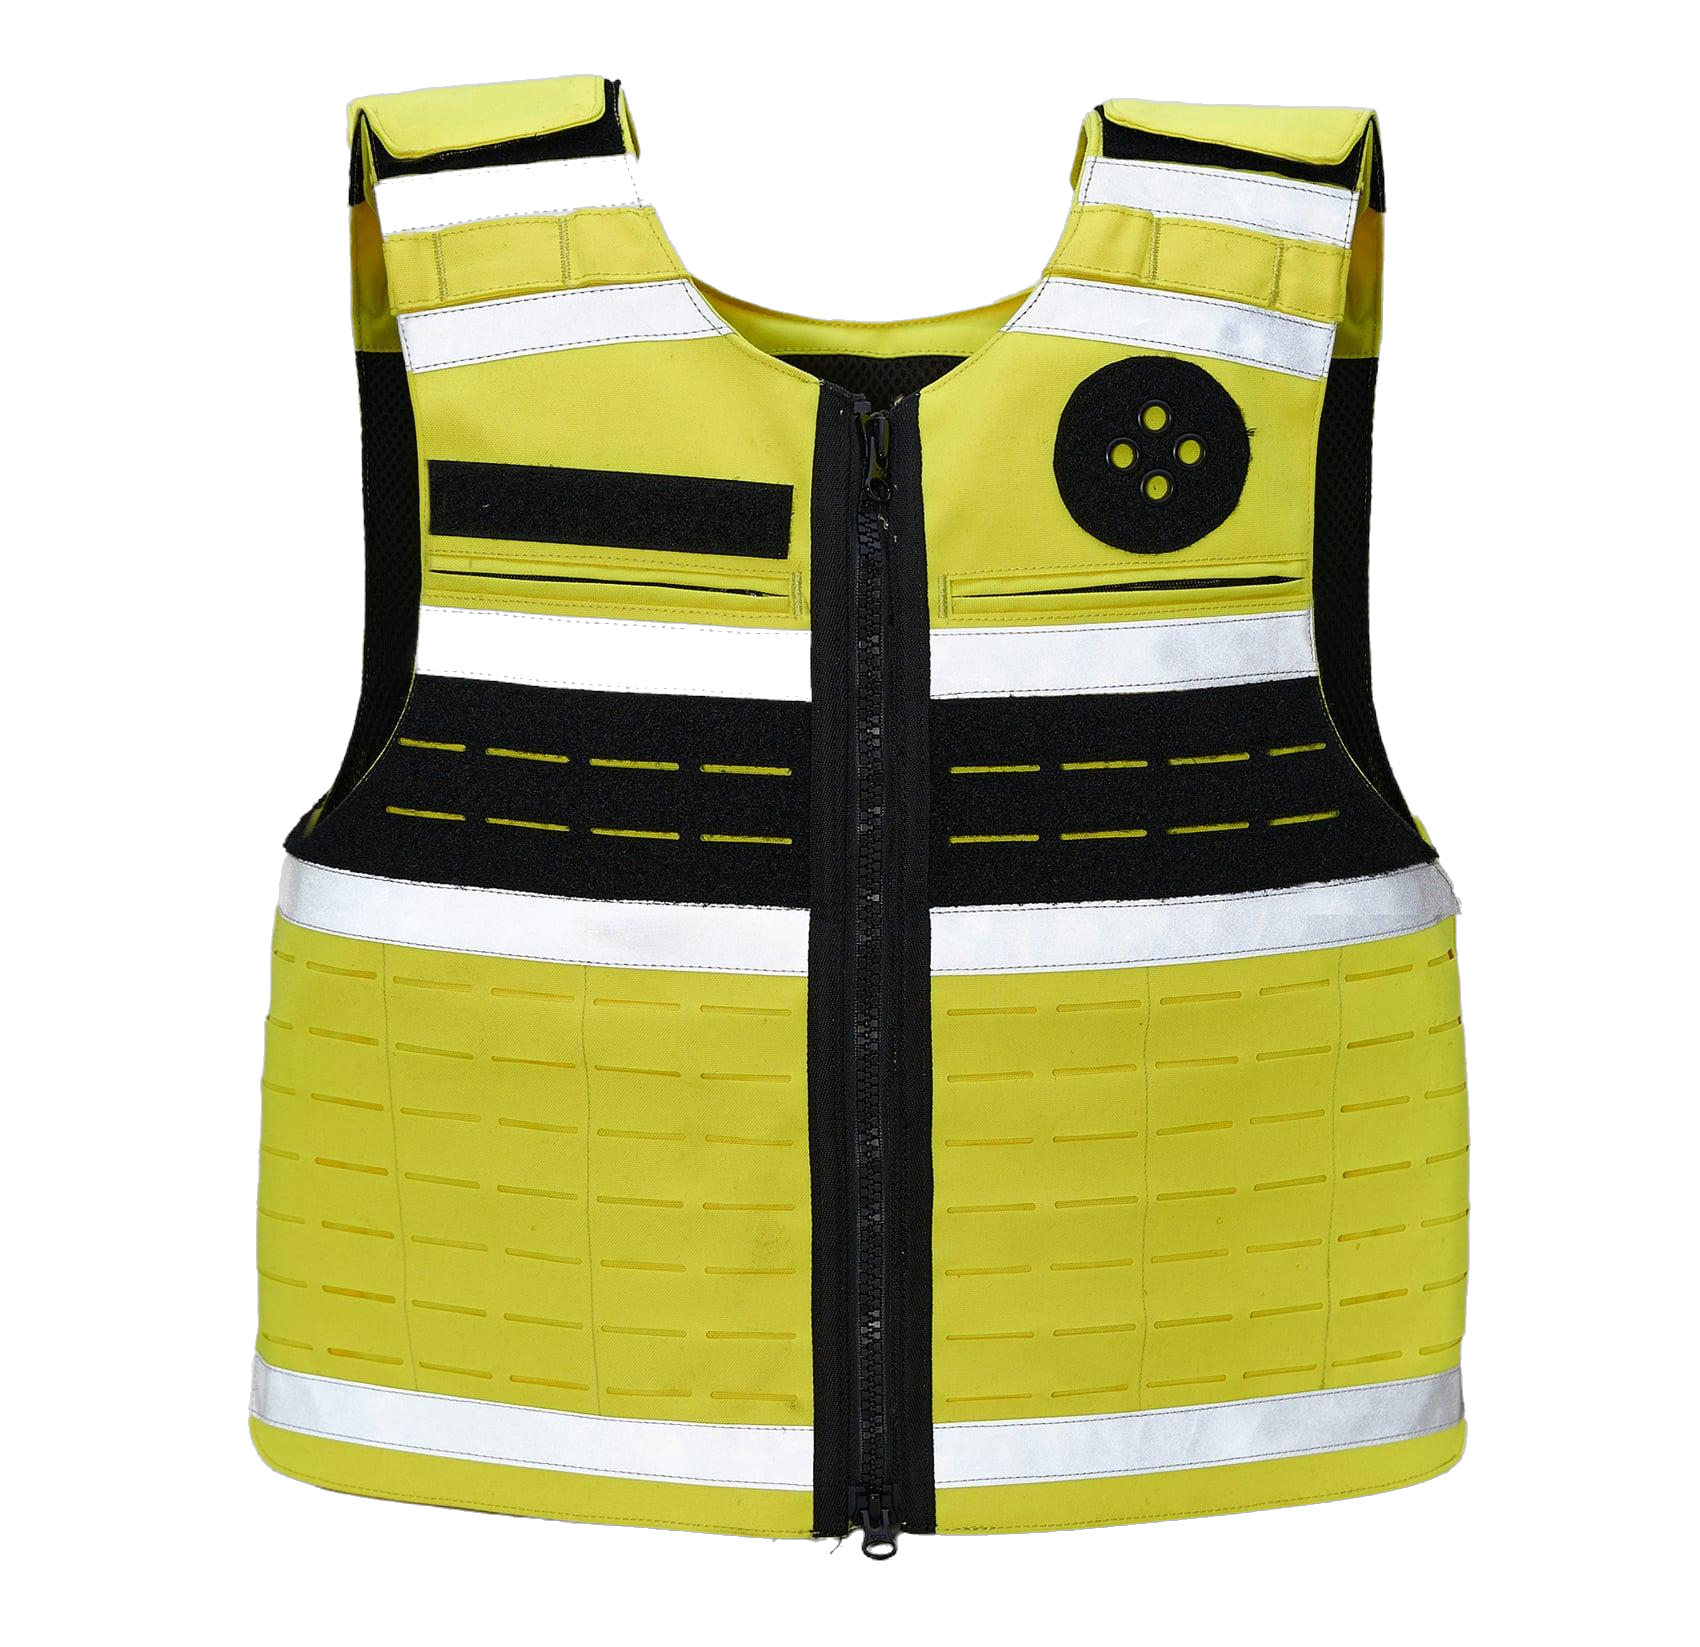 Bulletproof Vest for Security Guards - Ace Link Armor